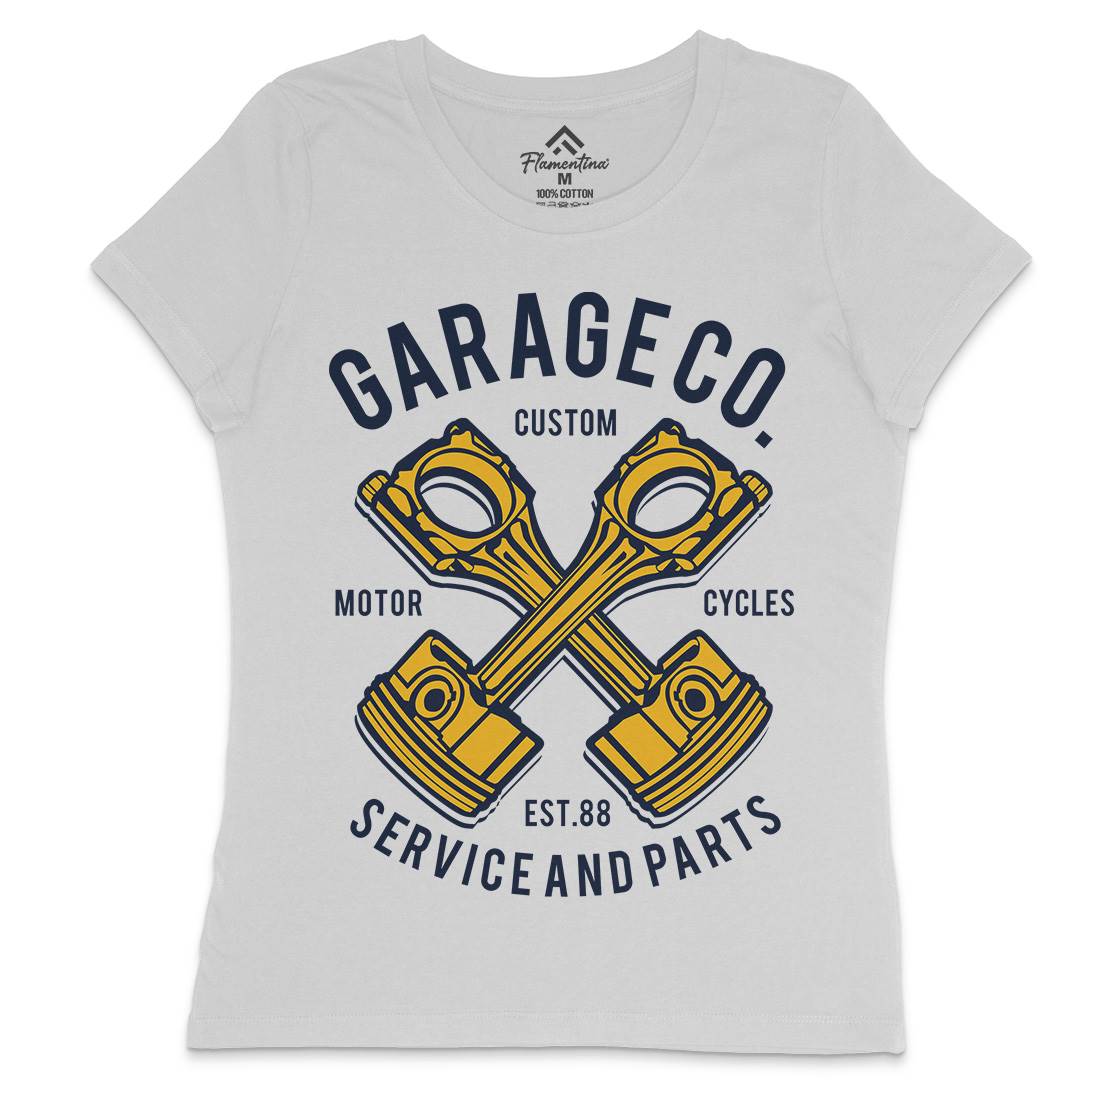 Garage Co Womens Crew Neck T-Shirt Cars B216